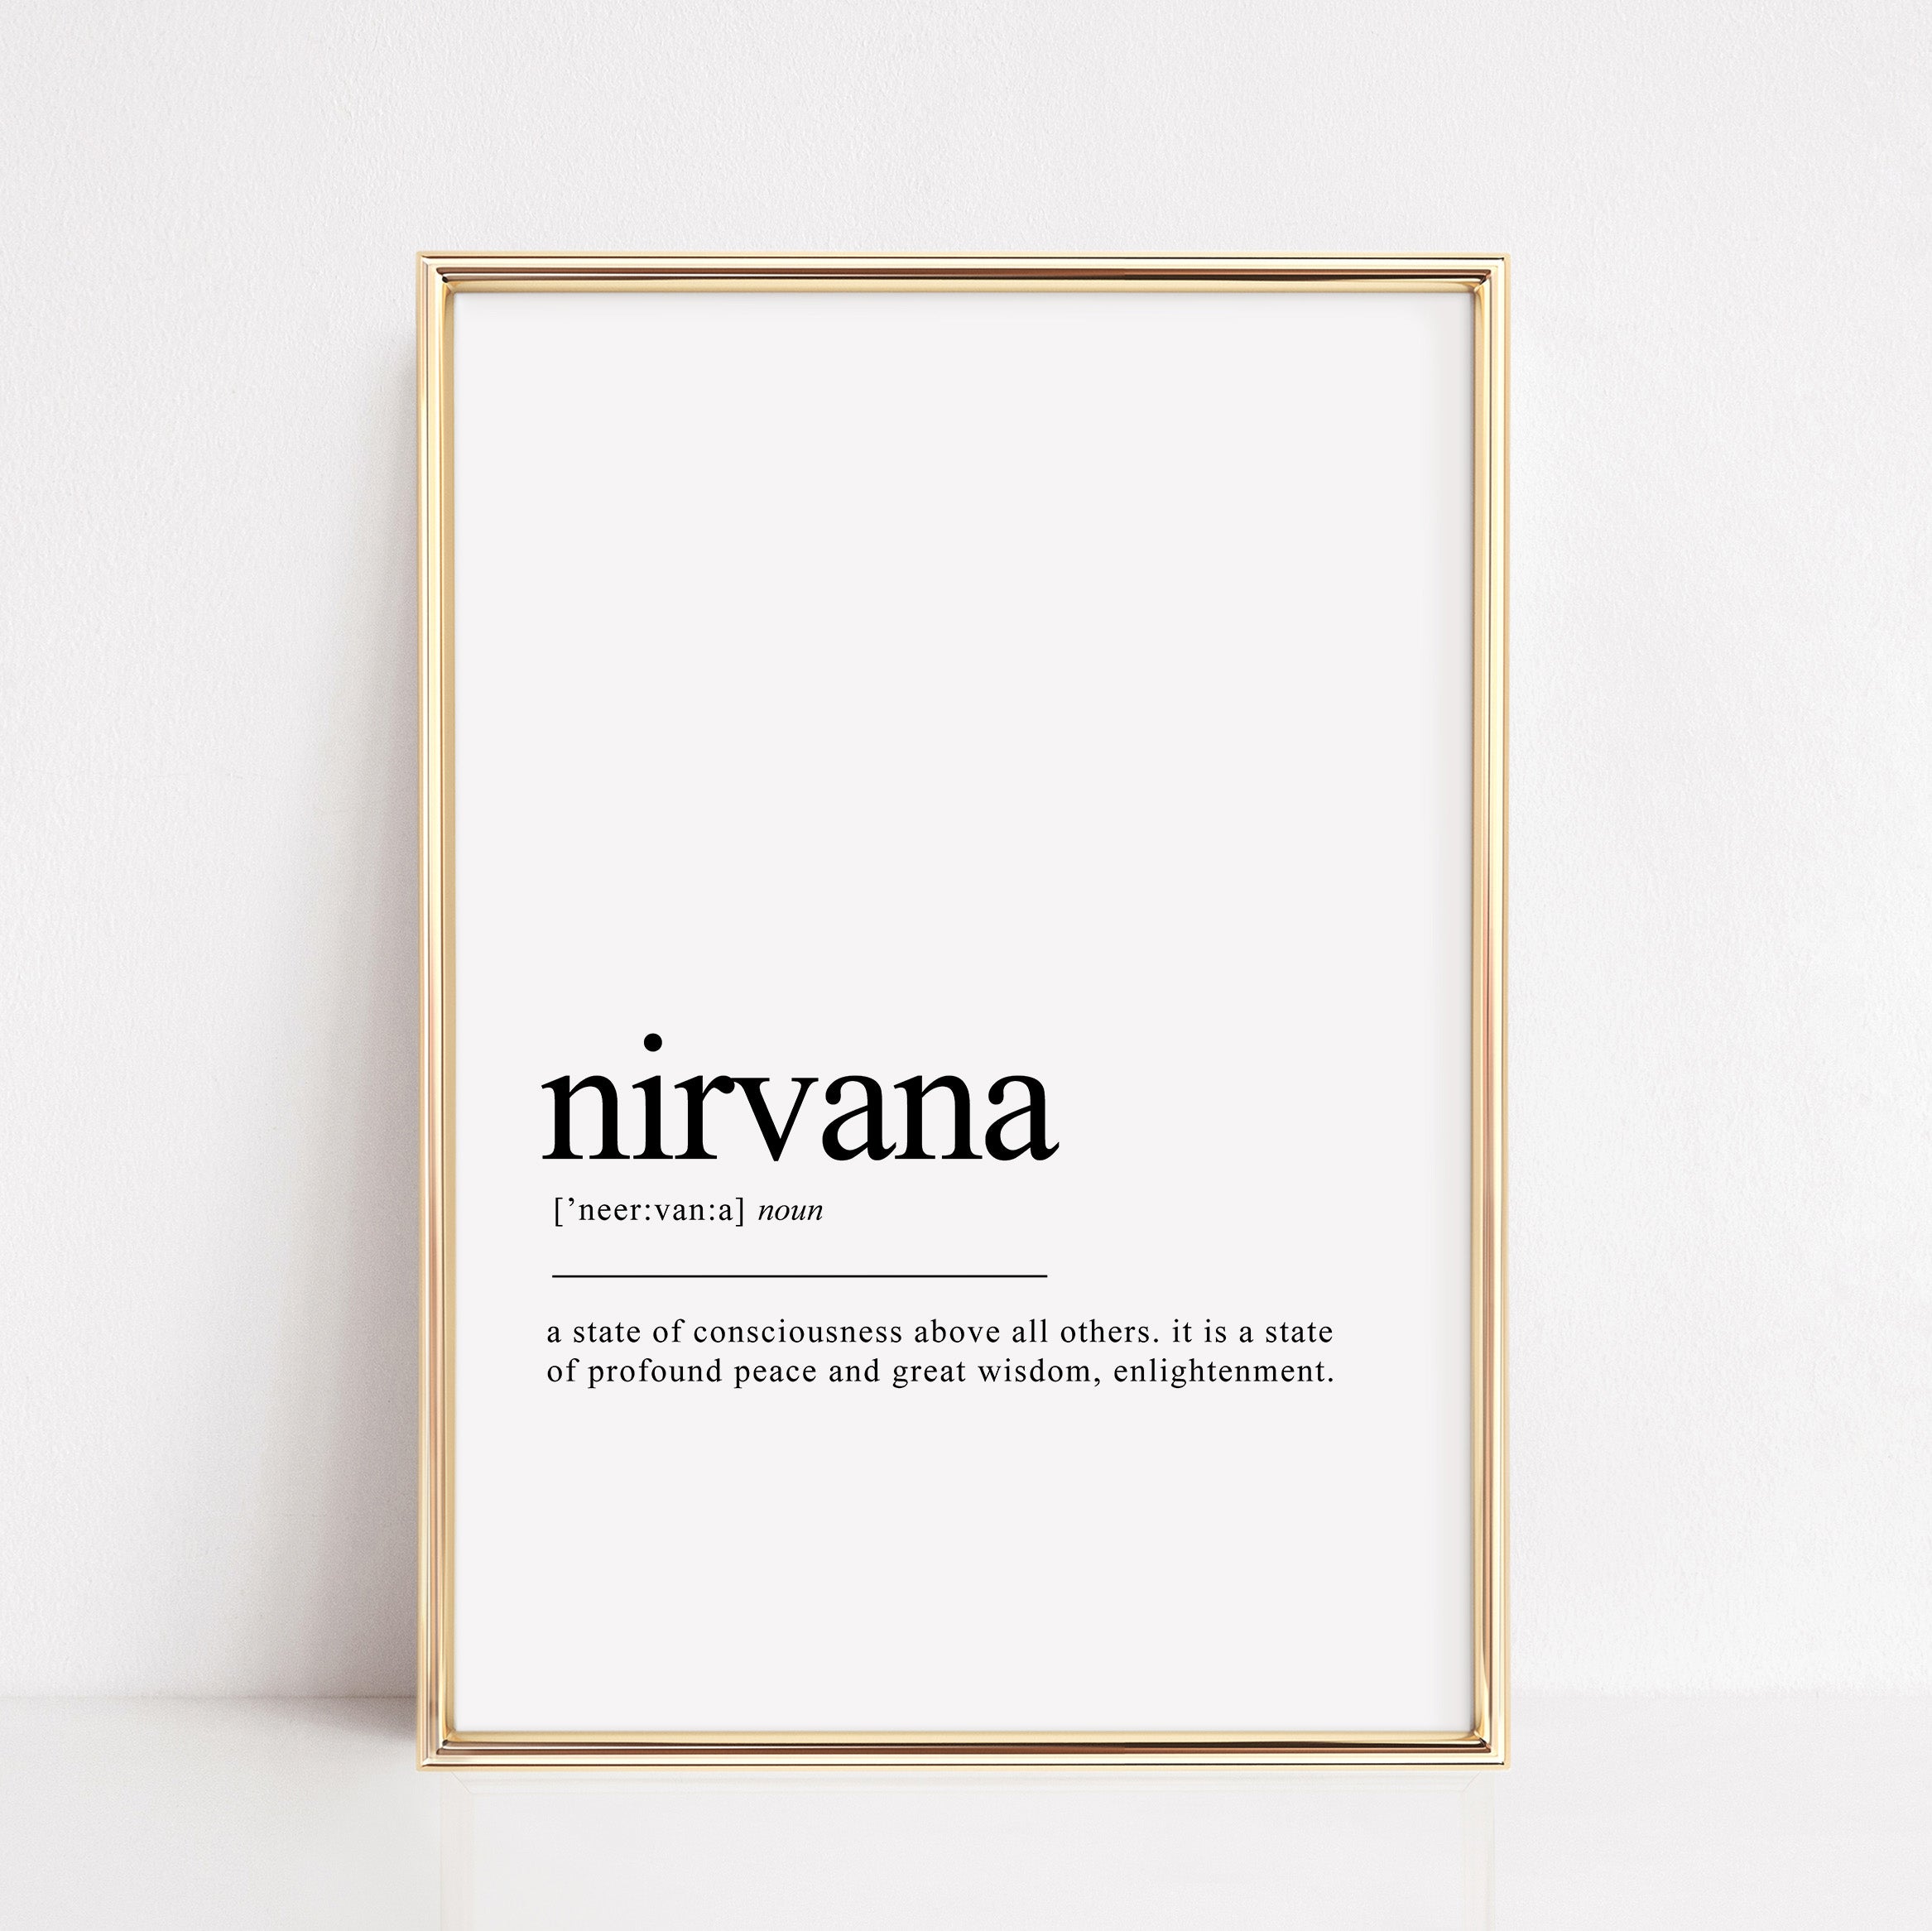 nirvana definition print